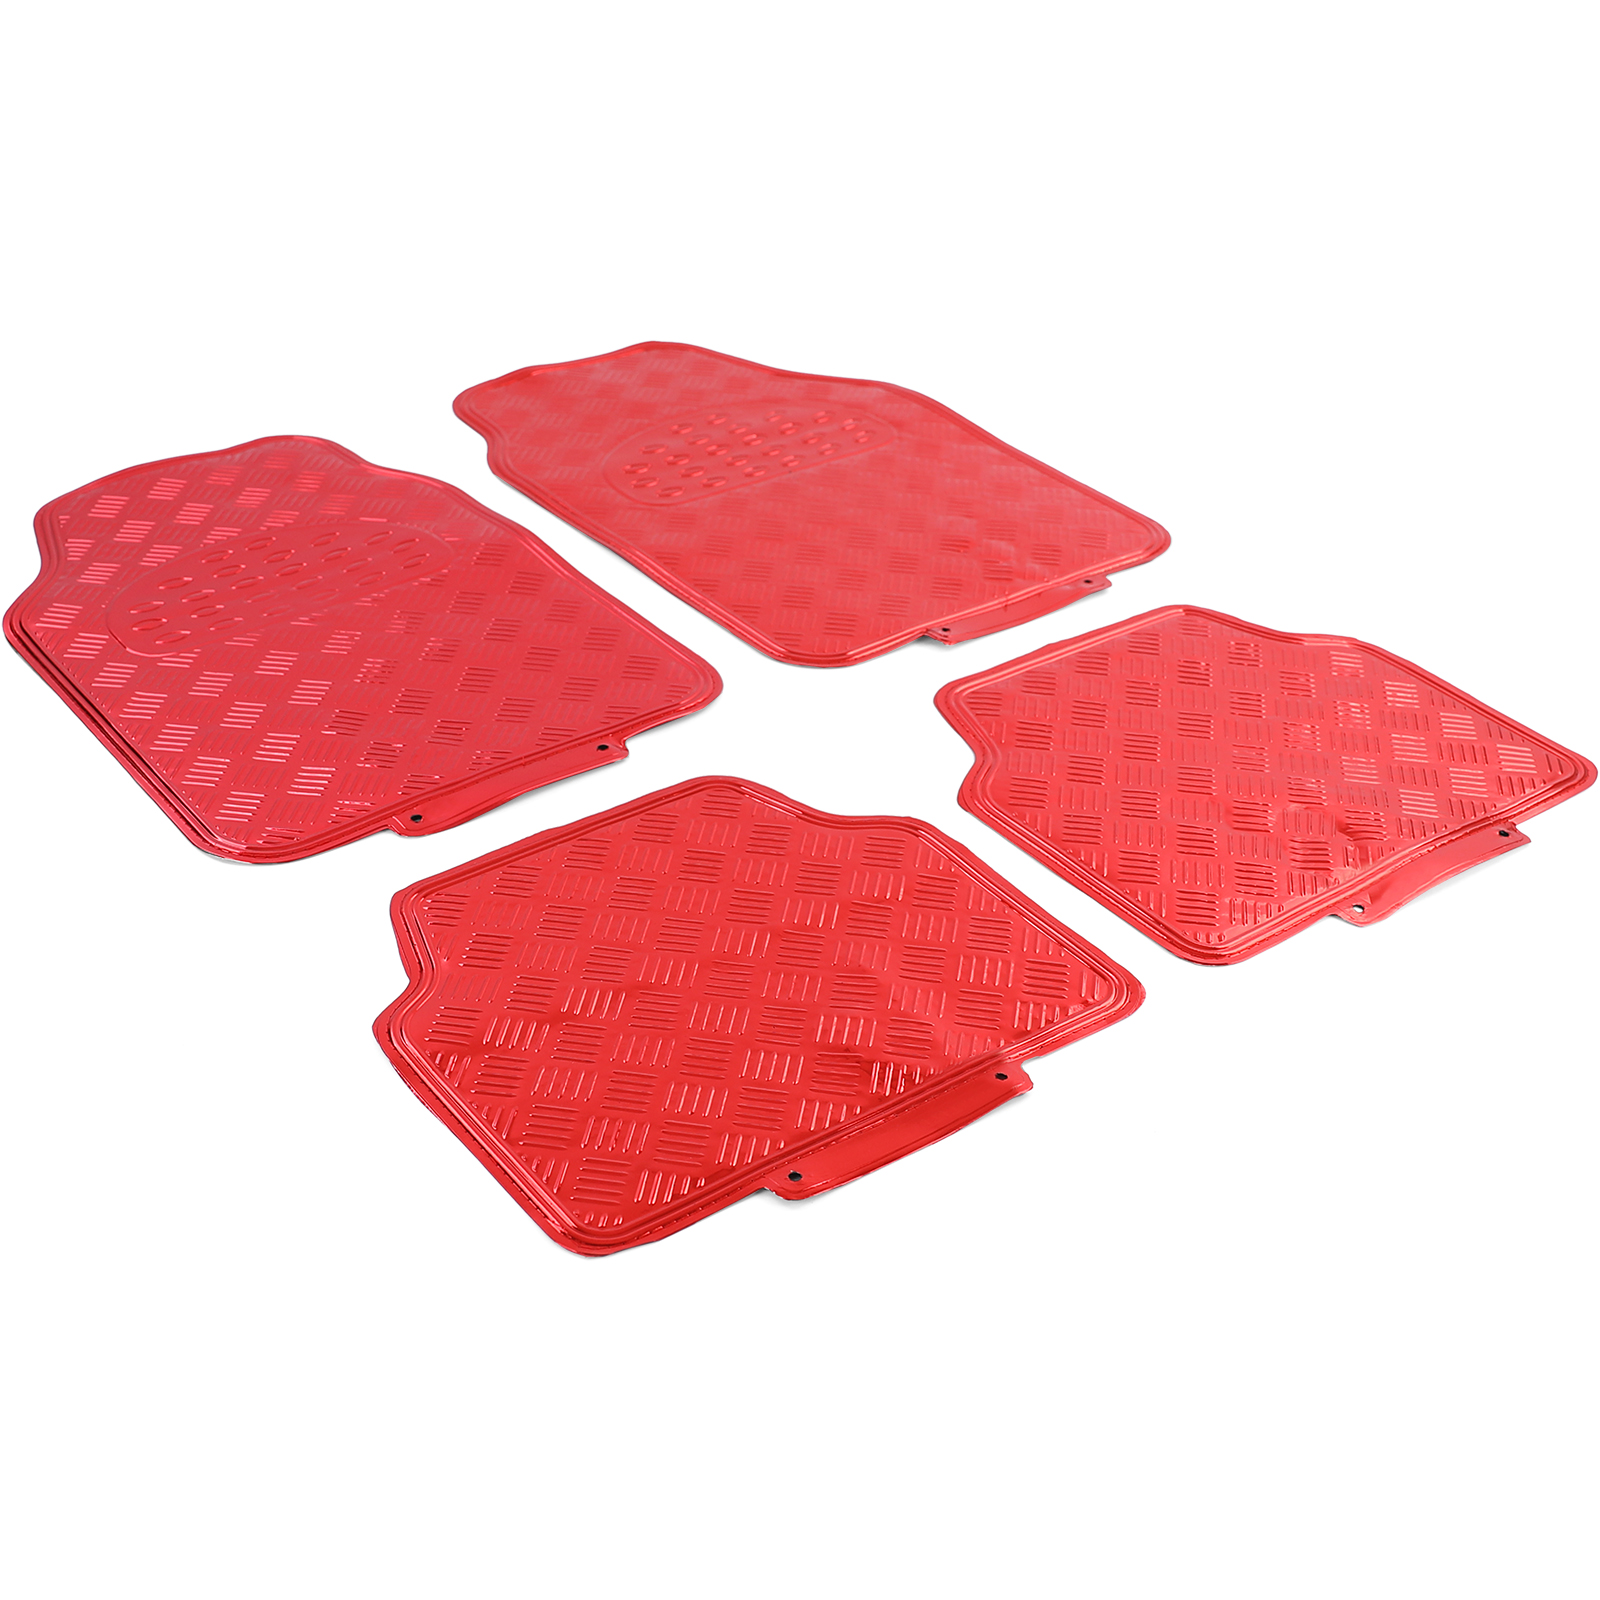 Auto Gummi Fußmatten universal Alu Riffelblech Optik 4-teilig Chrom Rot  kaufen